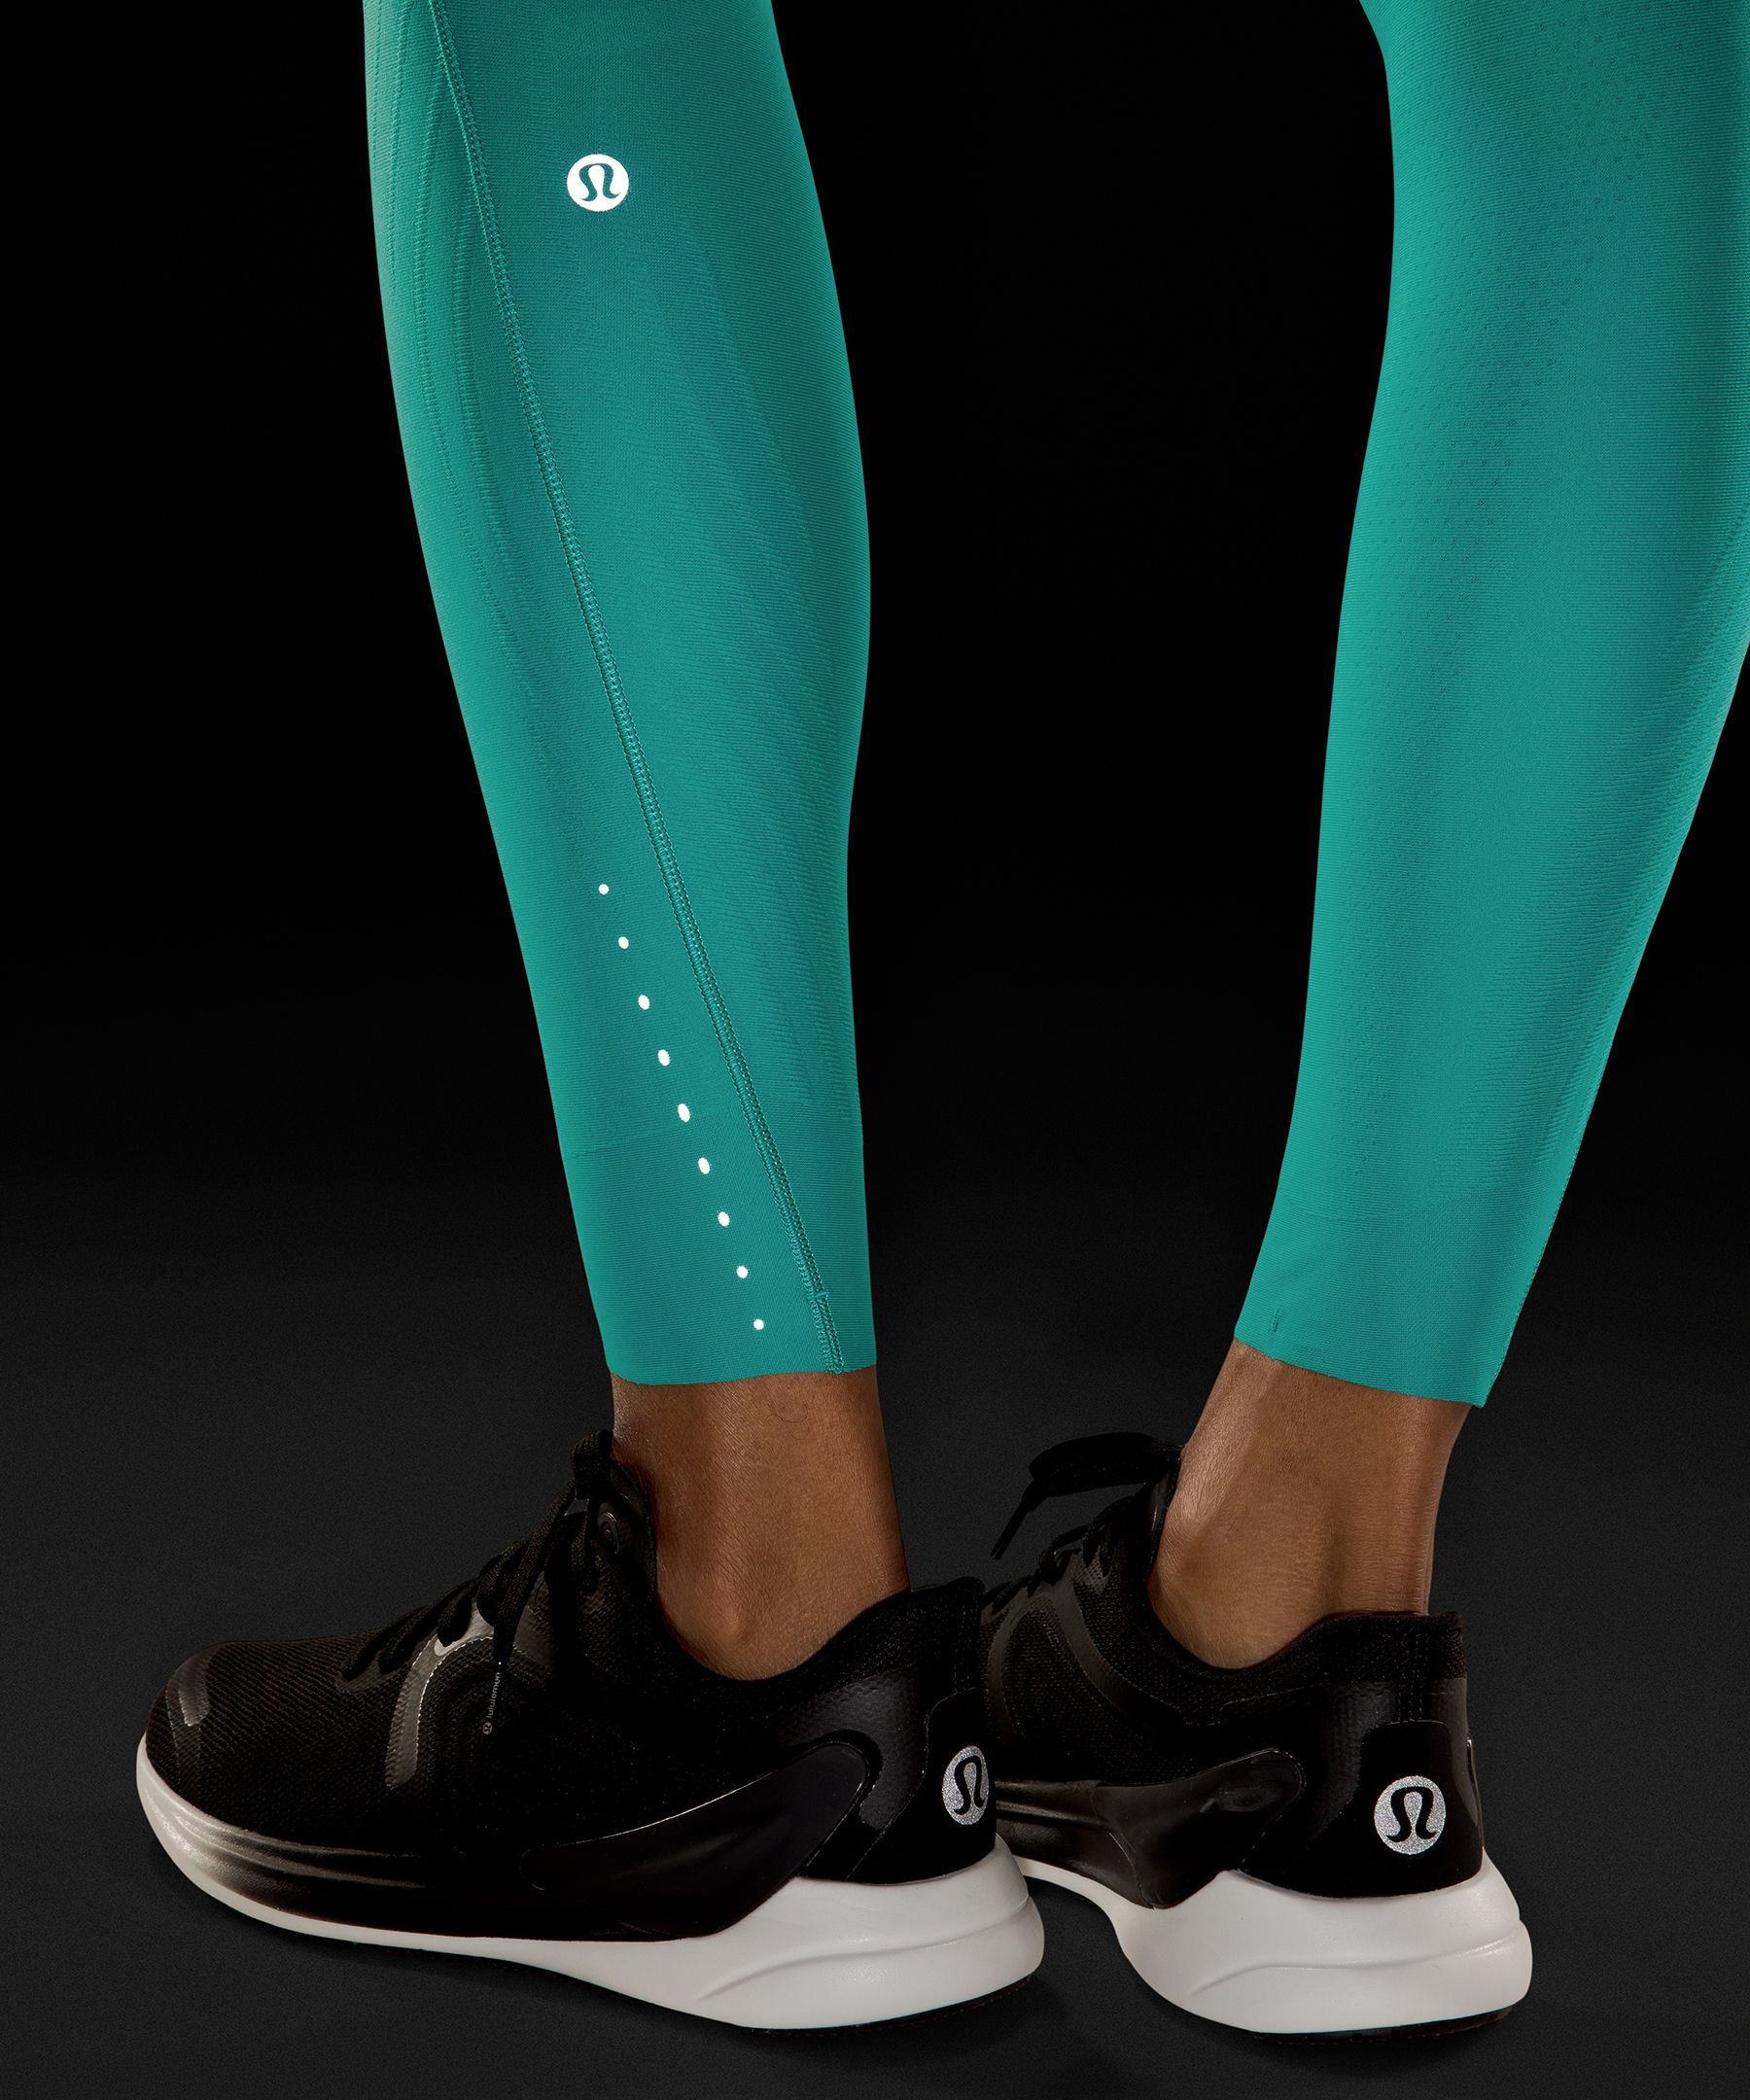 Lululemon athletica SenseKnit Composite High-Rise Running Tight 28, Women's  Leggings/Tights